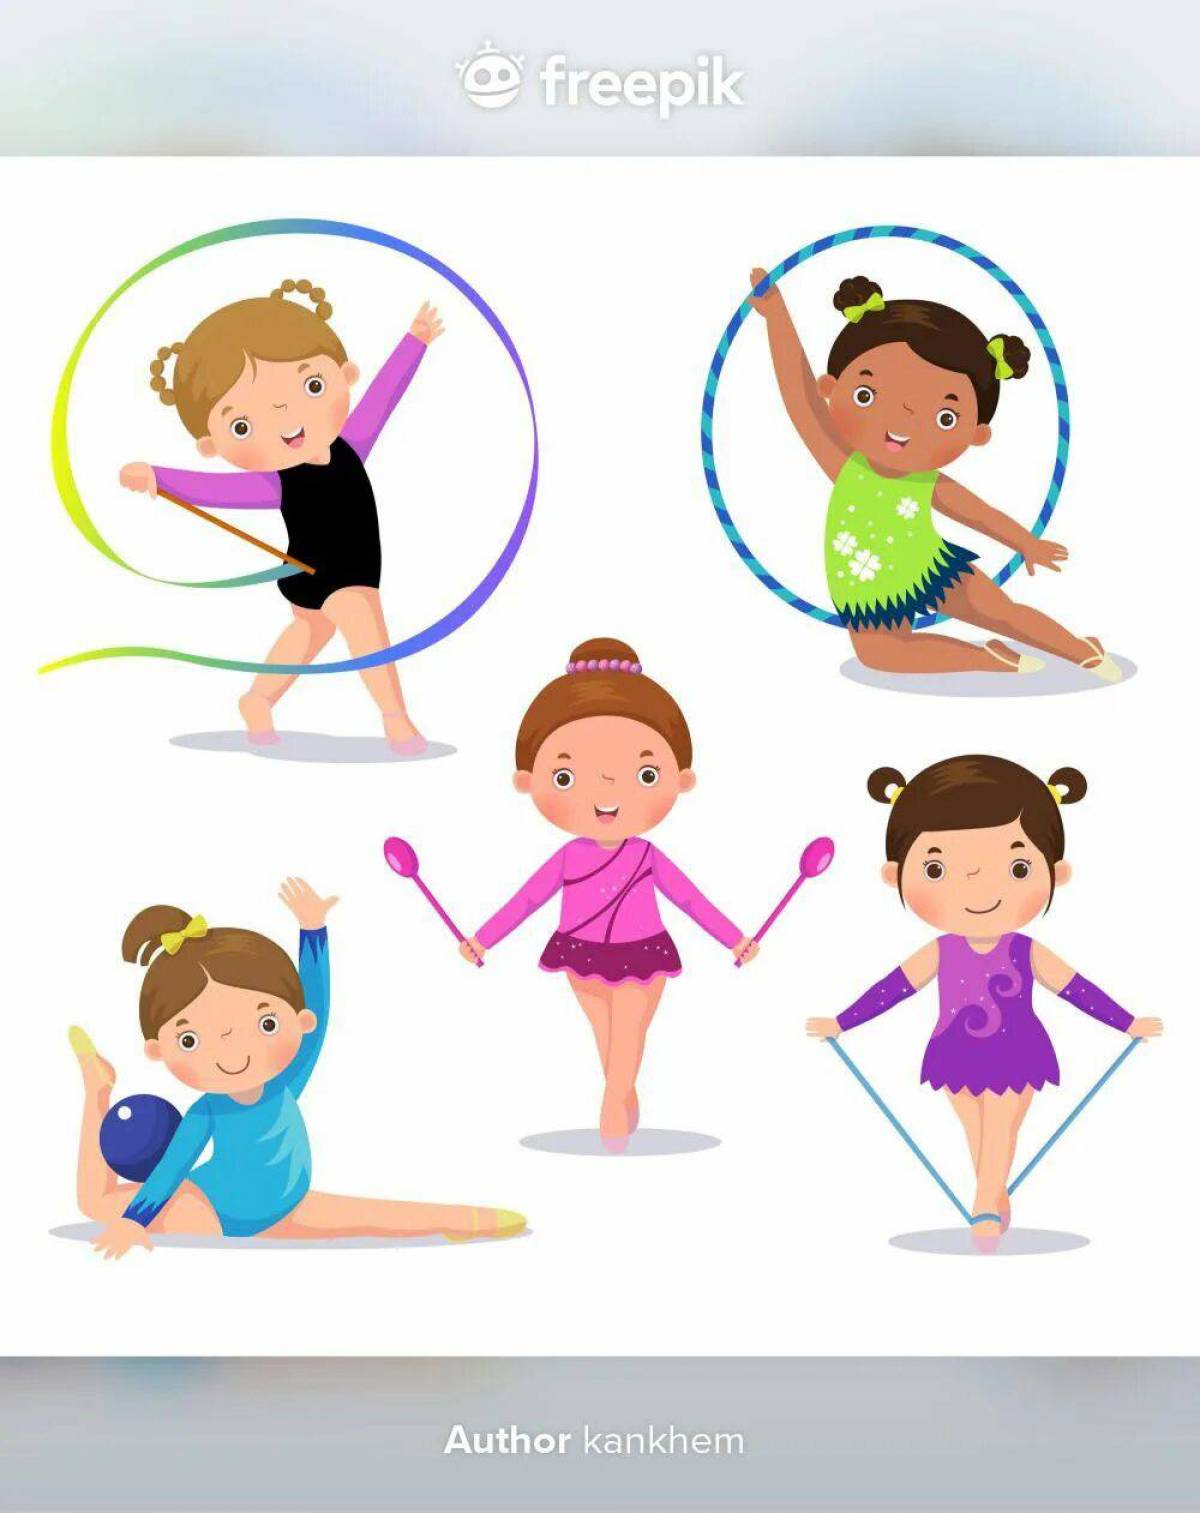 спорт гимнастика картинки для детей